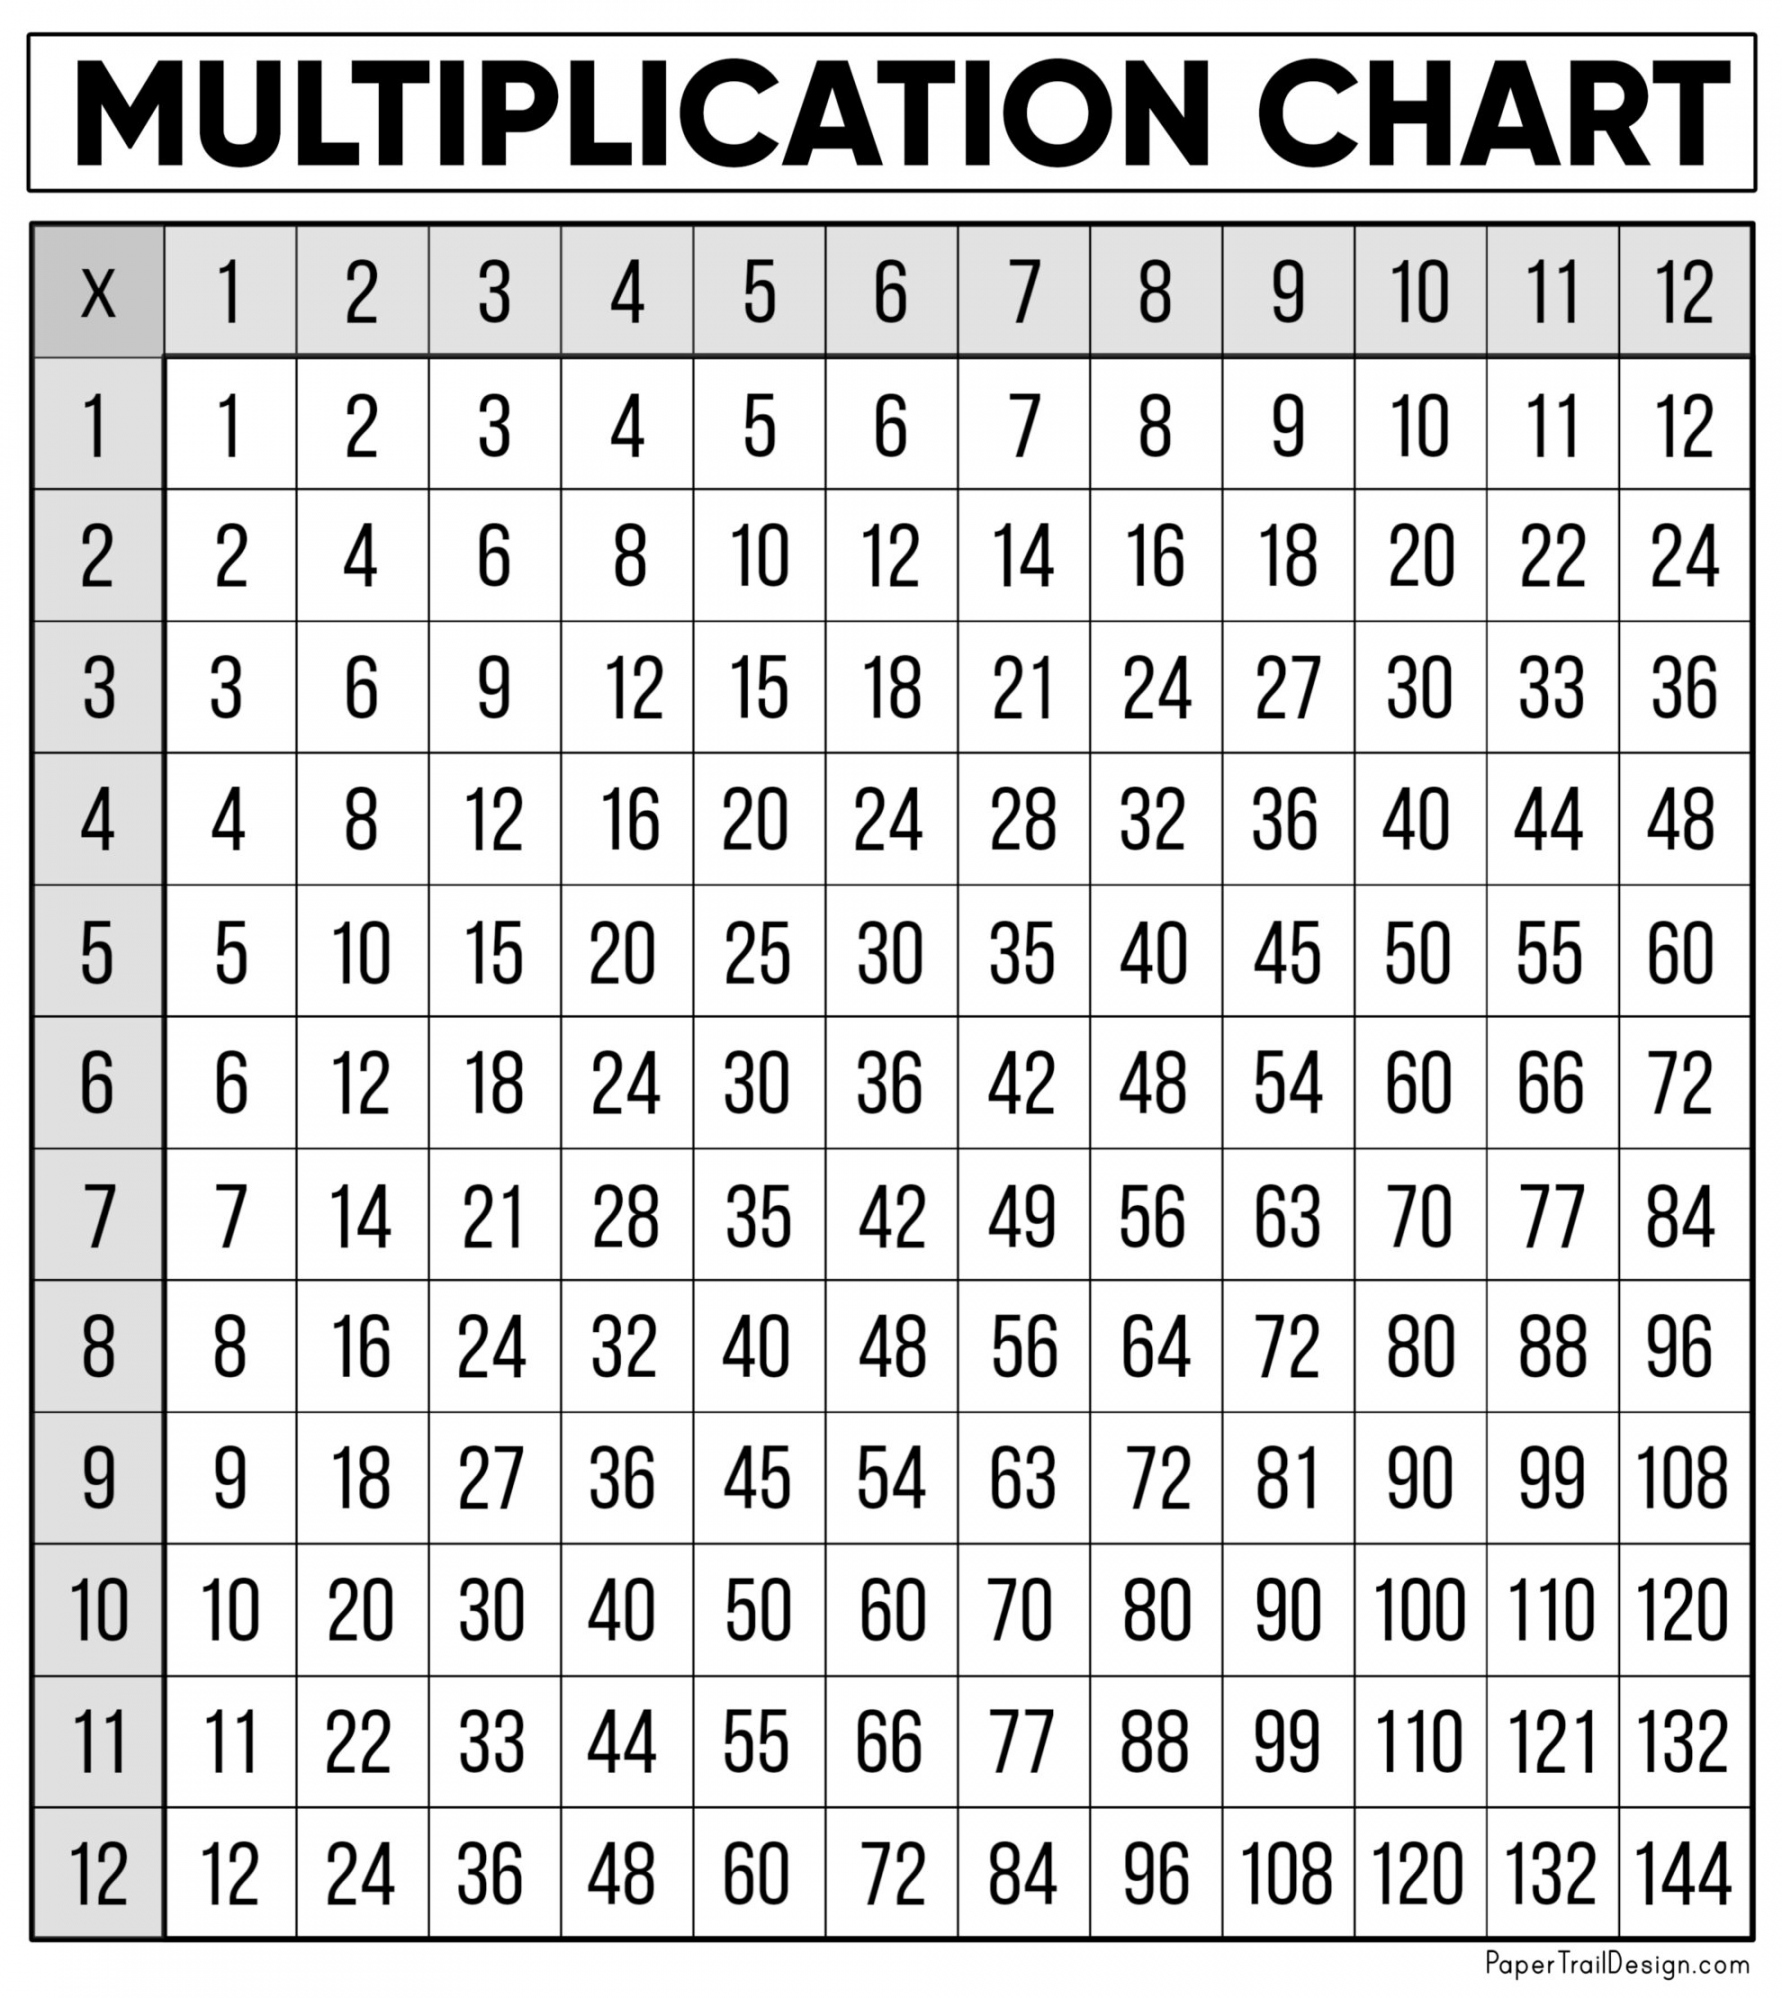 Free Multiplication Chart Printable - Paper Trail Design - FREE Printables - Multiplication Charts Free Printable